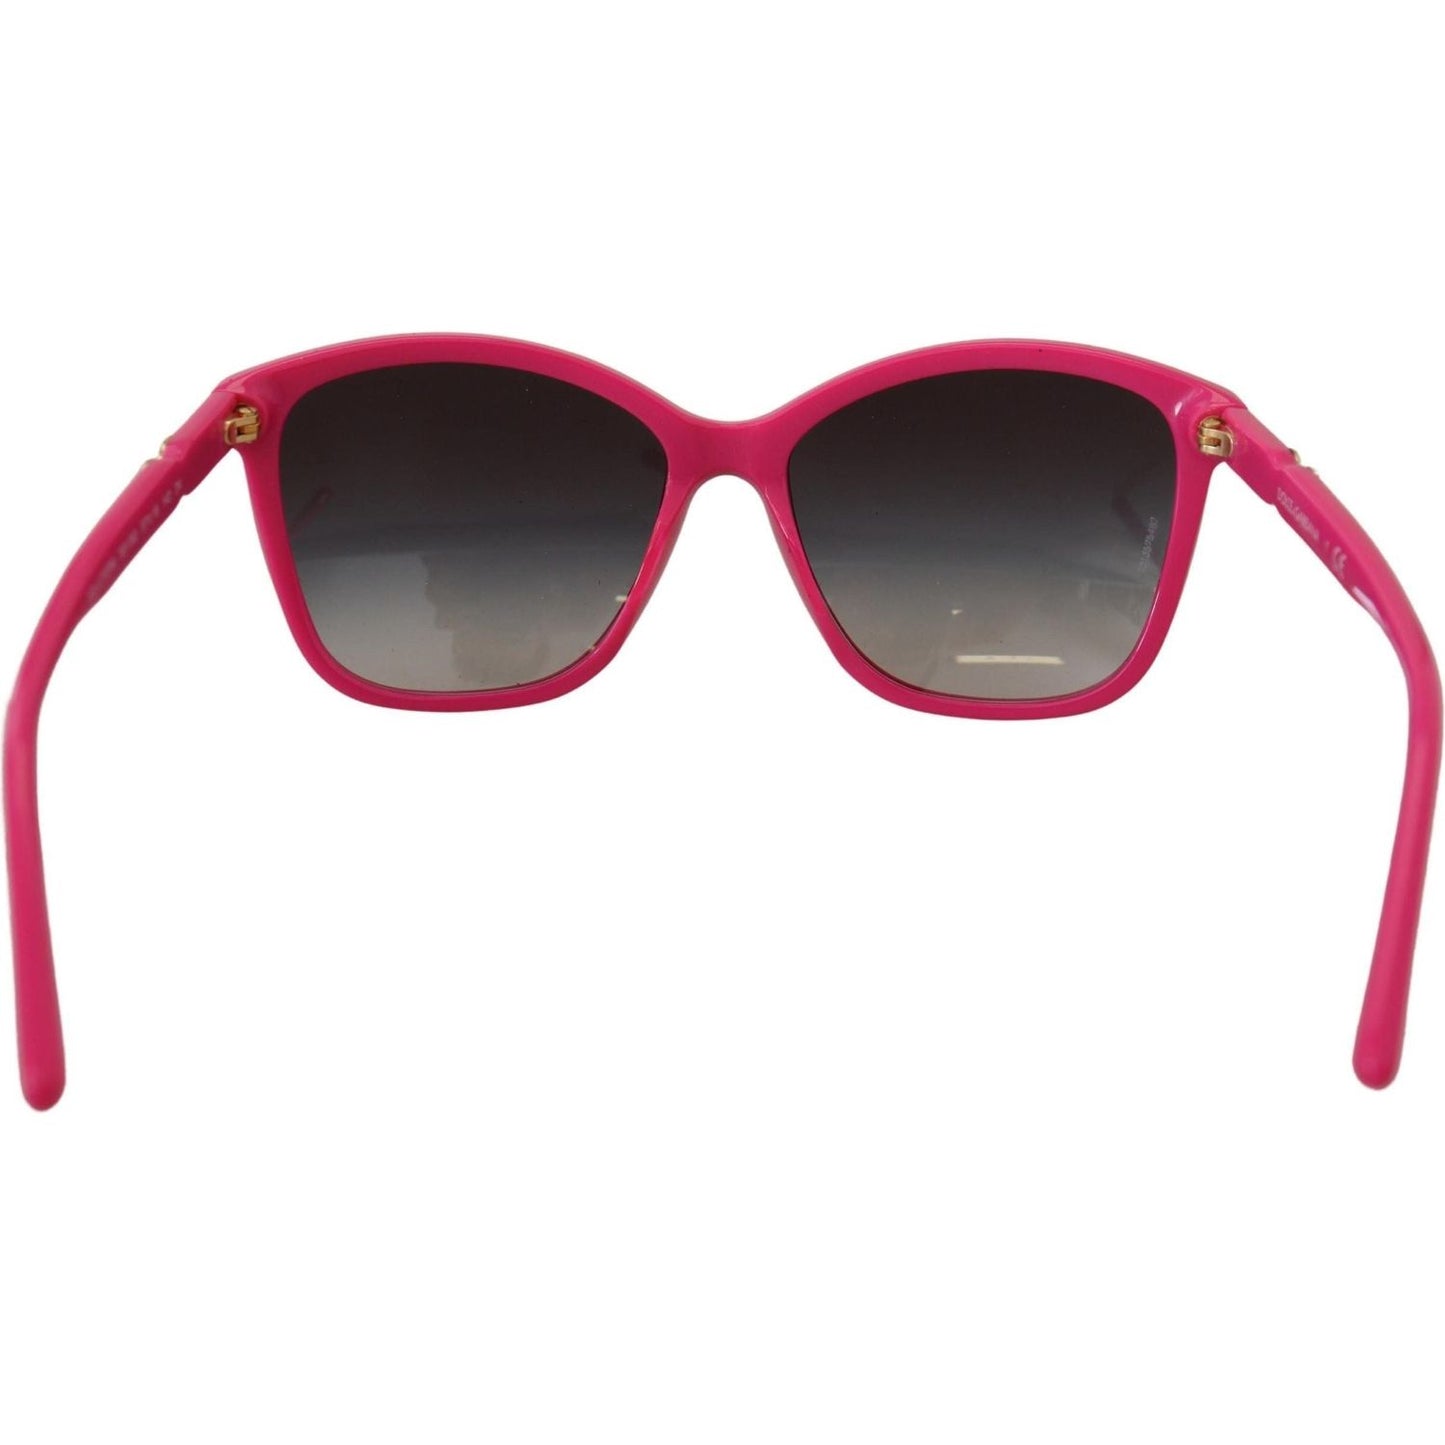 Dolce & Gabbana Elegant Pink Round Sunglasses for Women pink-acetate-frame-round-shades-dg4170m-women-sunglasses IMG_4607-scaled-8b69f10f-a36.jpg